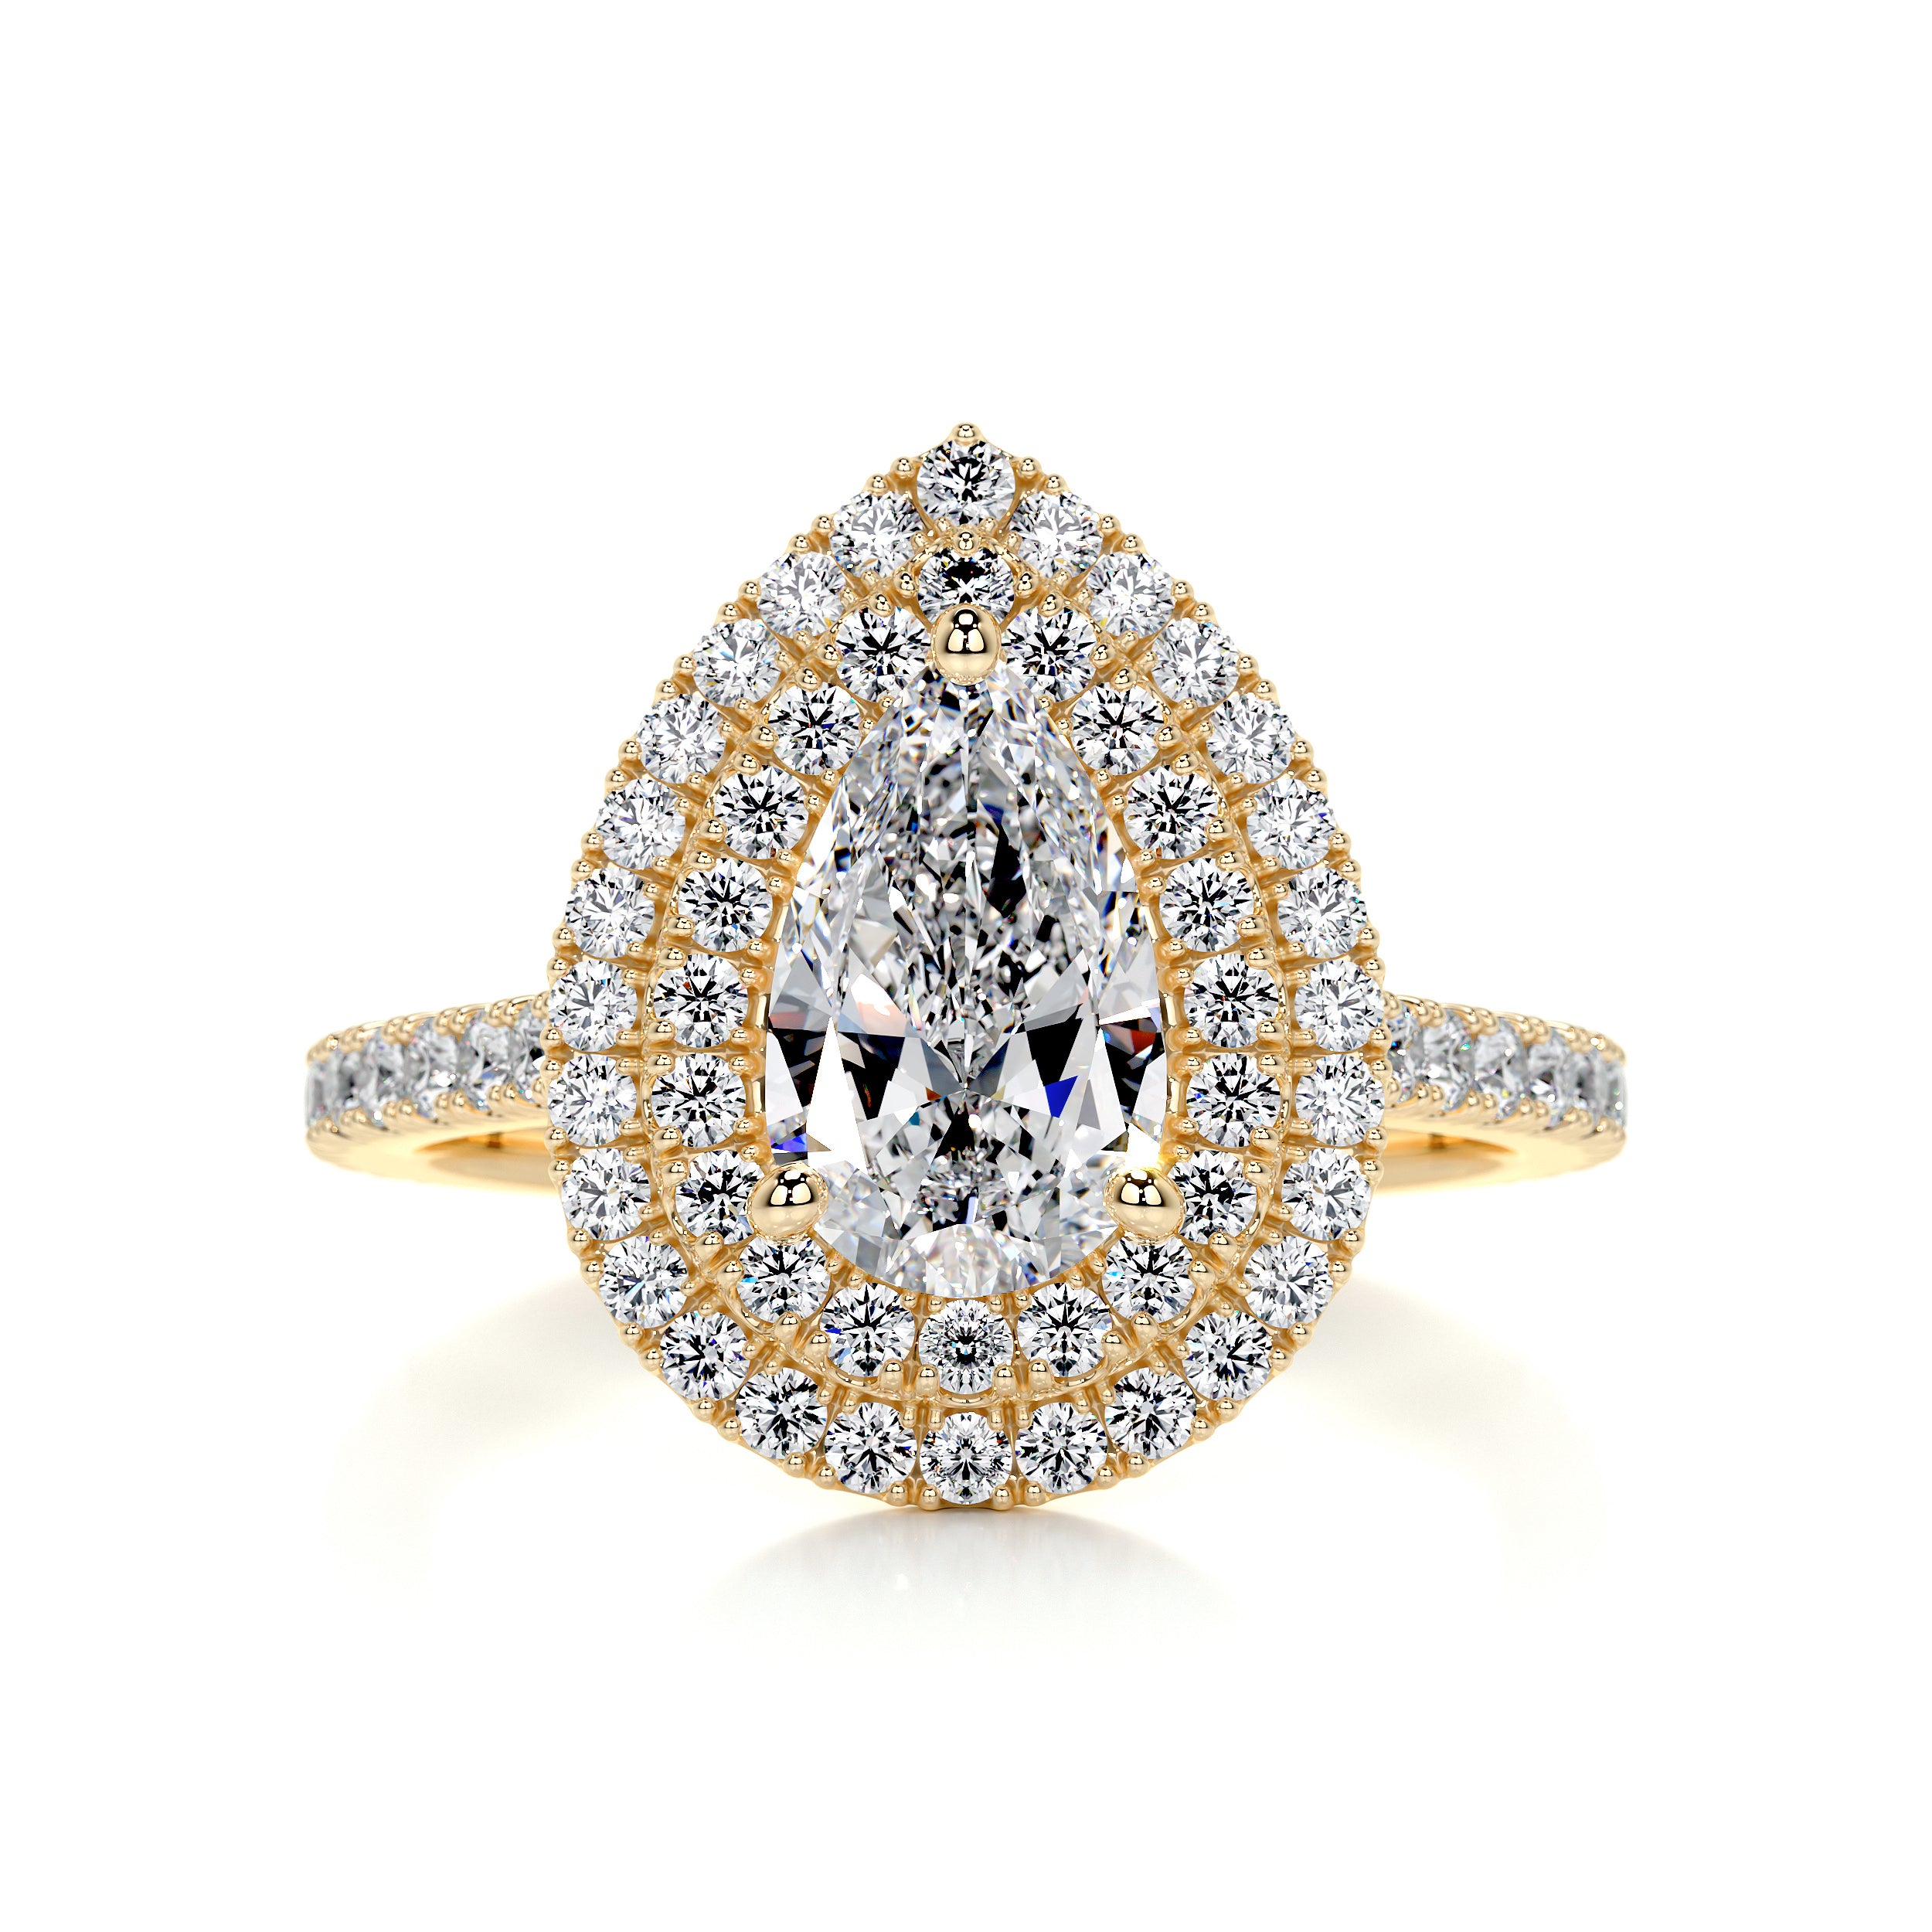 Gloria Diamond Engagement Ring   (1.65 Carat) -18K Yellow Gold